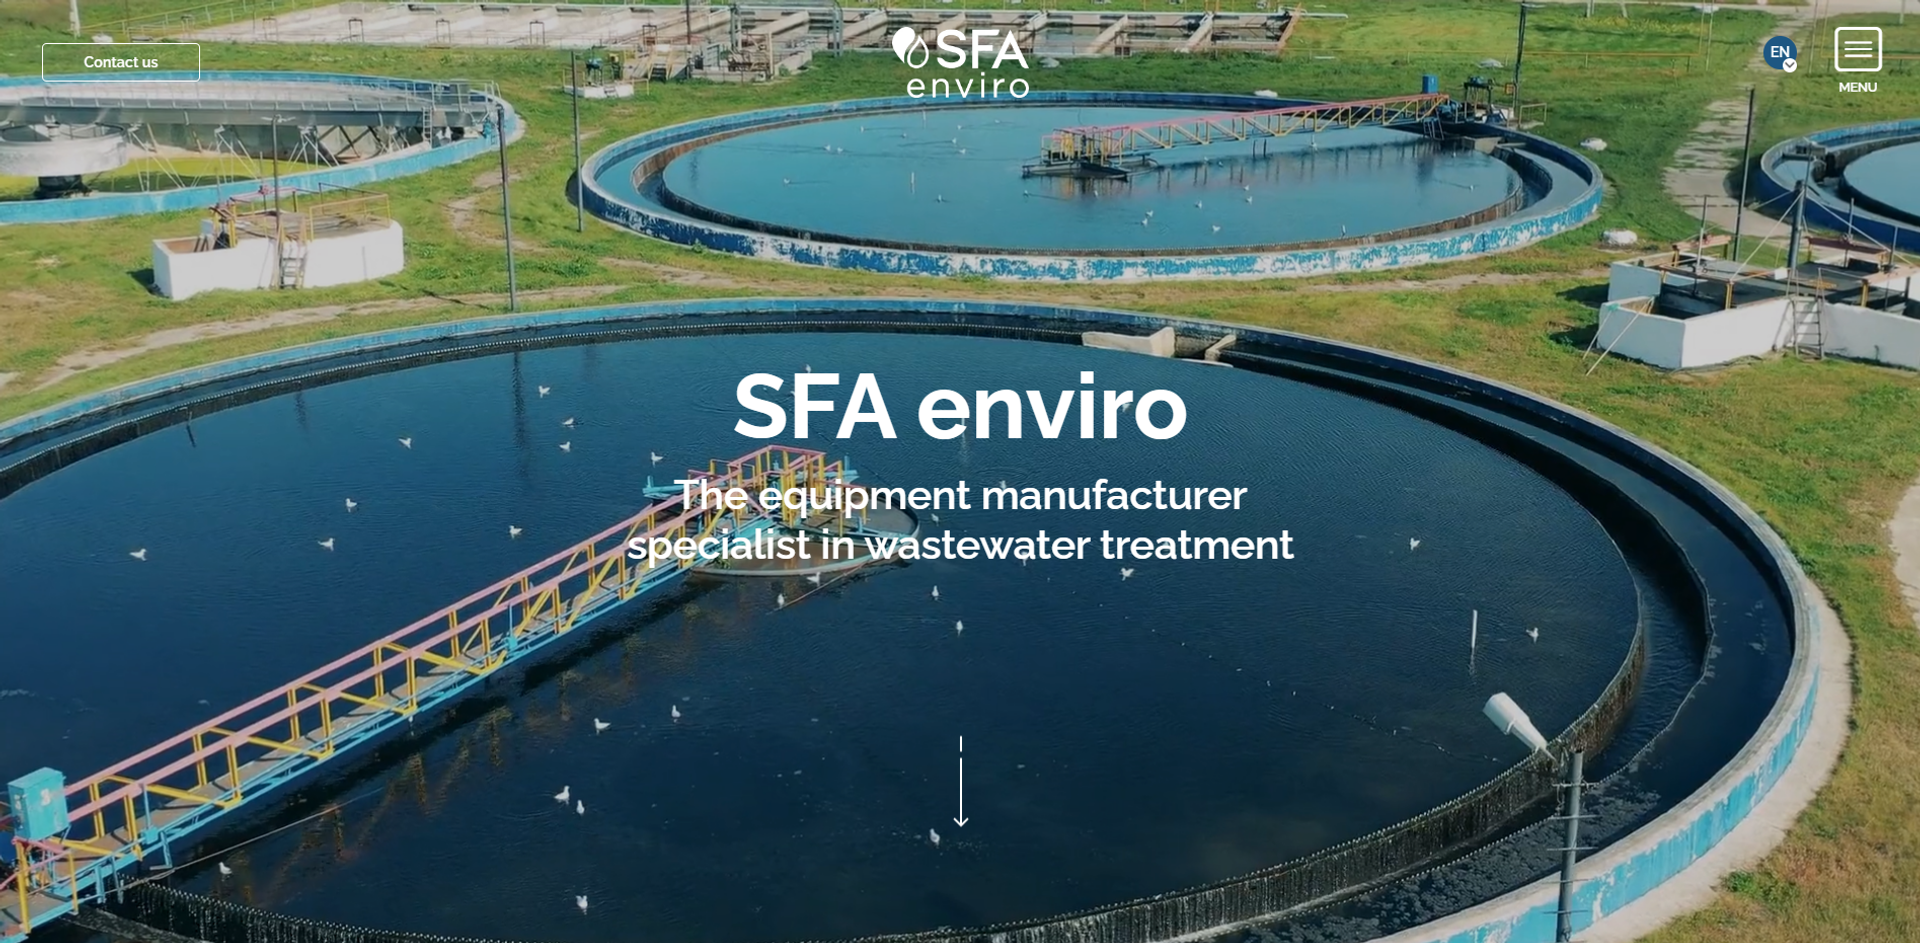 SFA enviro - Europelec - Aquaturbo